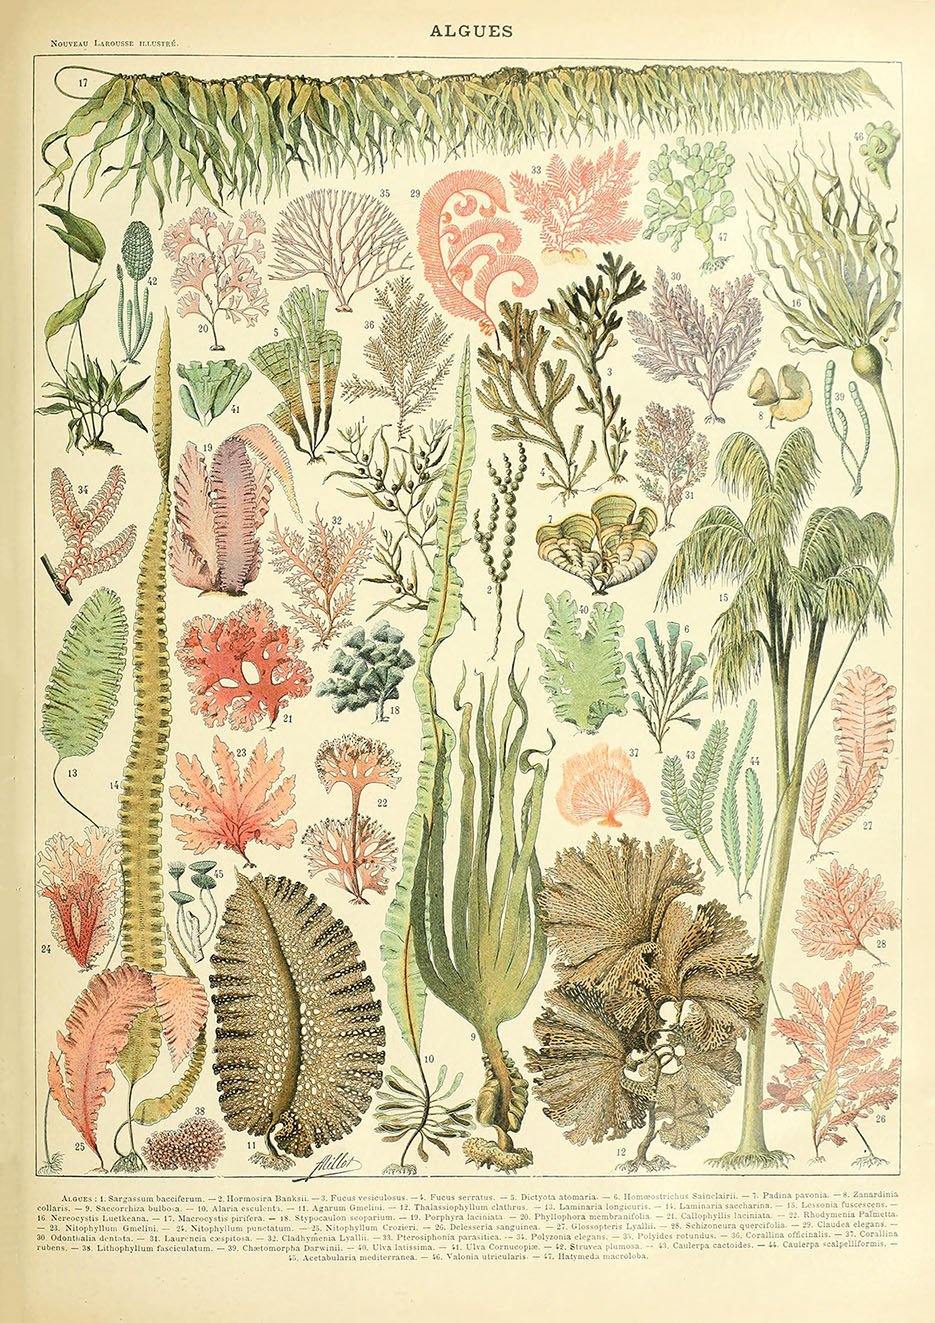 VINTAGE LEAVES POSTER: French Algues Art Print - Pimlico Prints